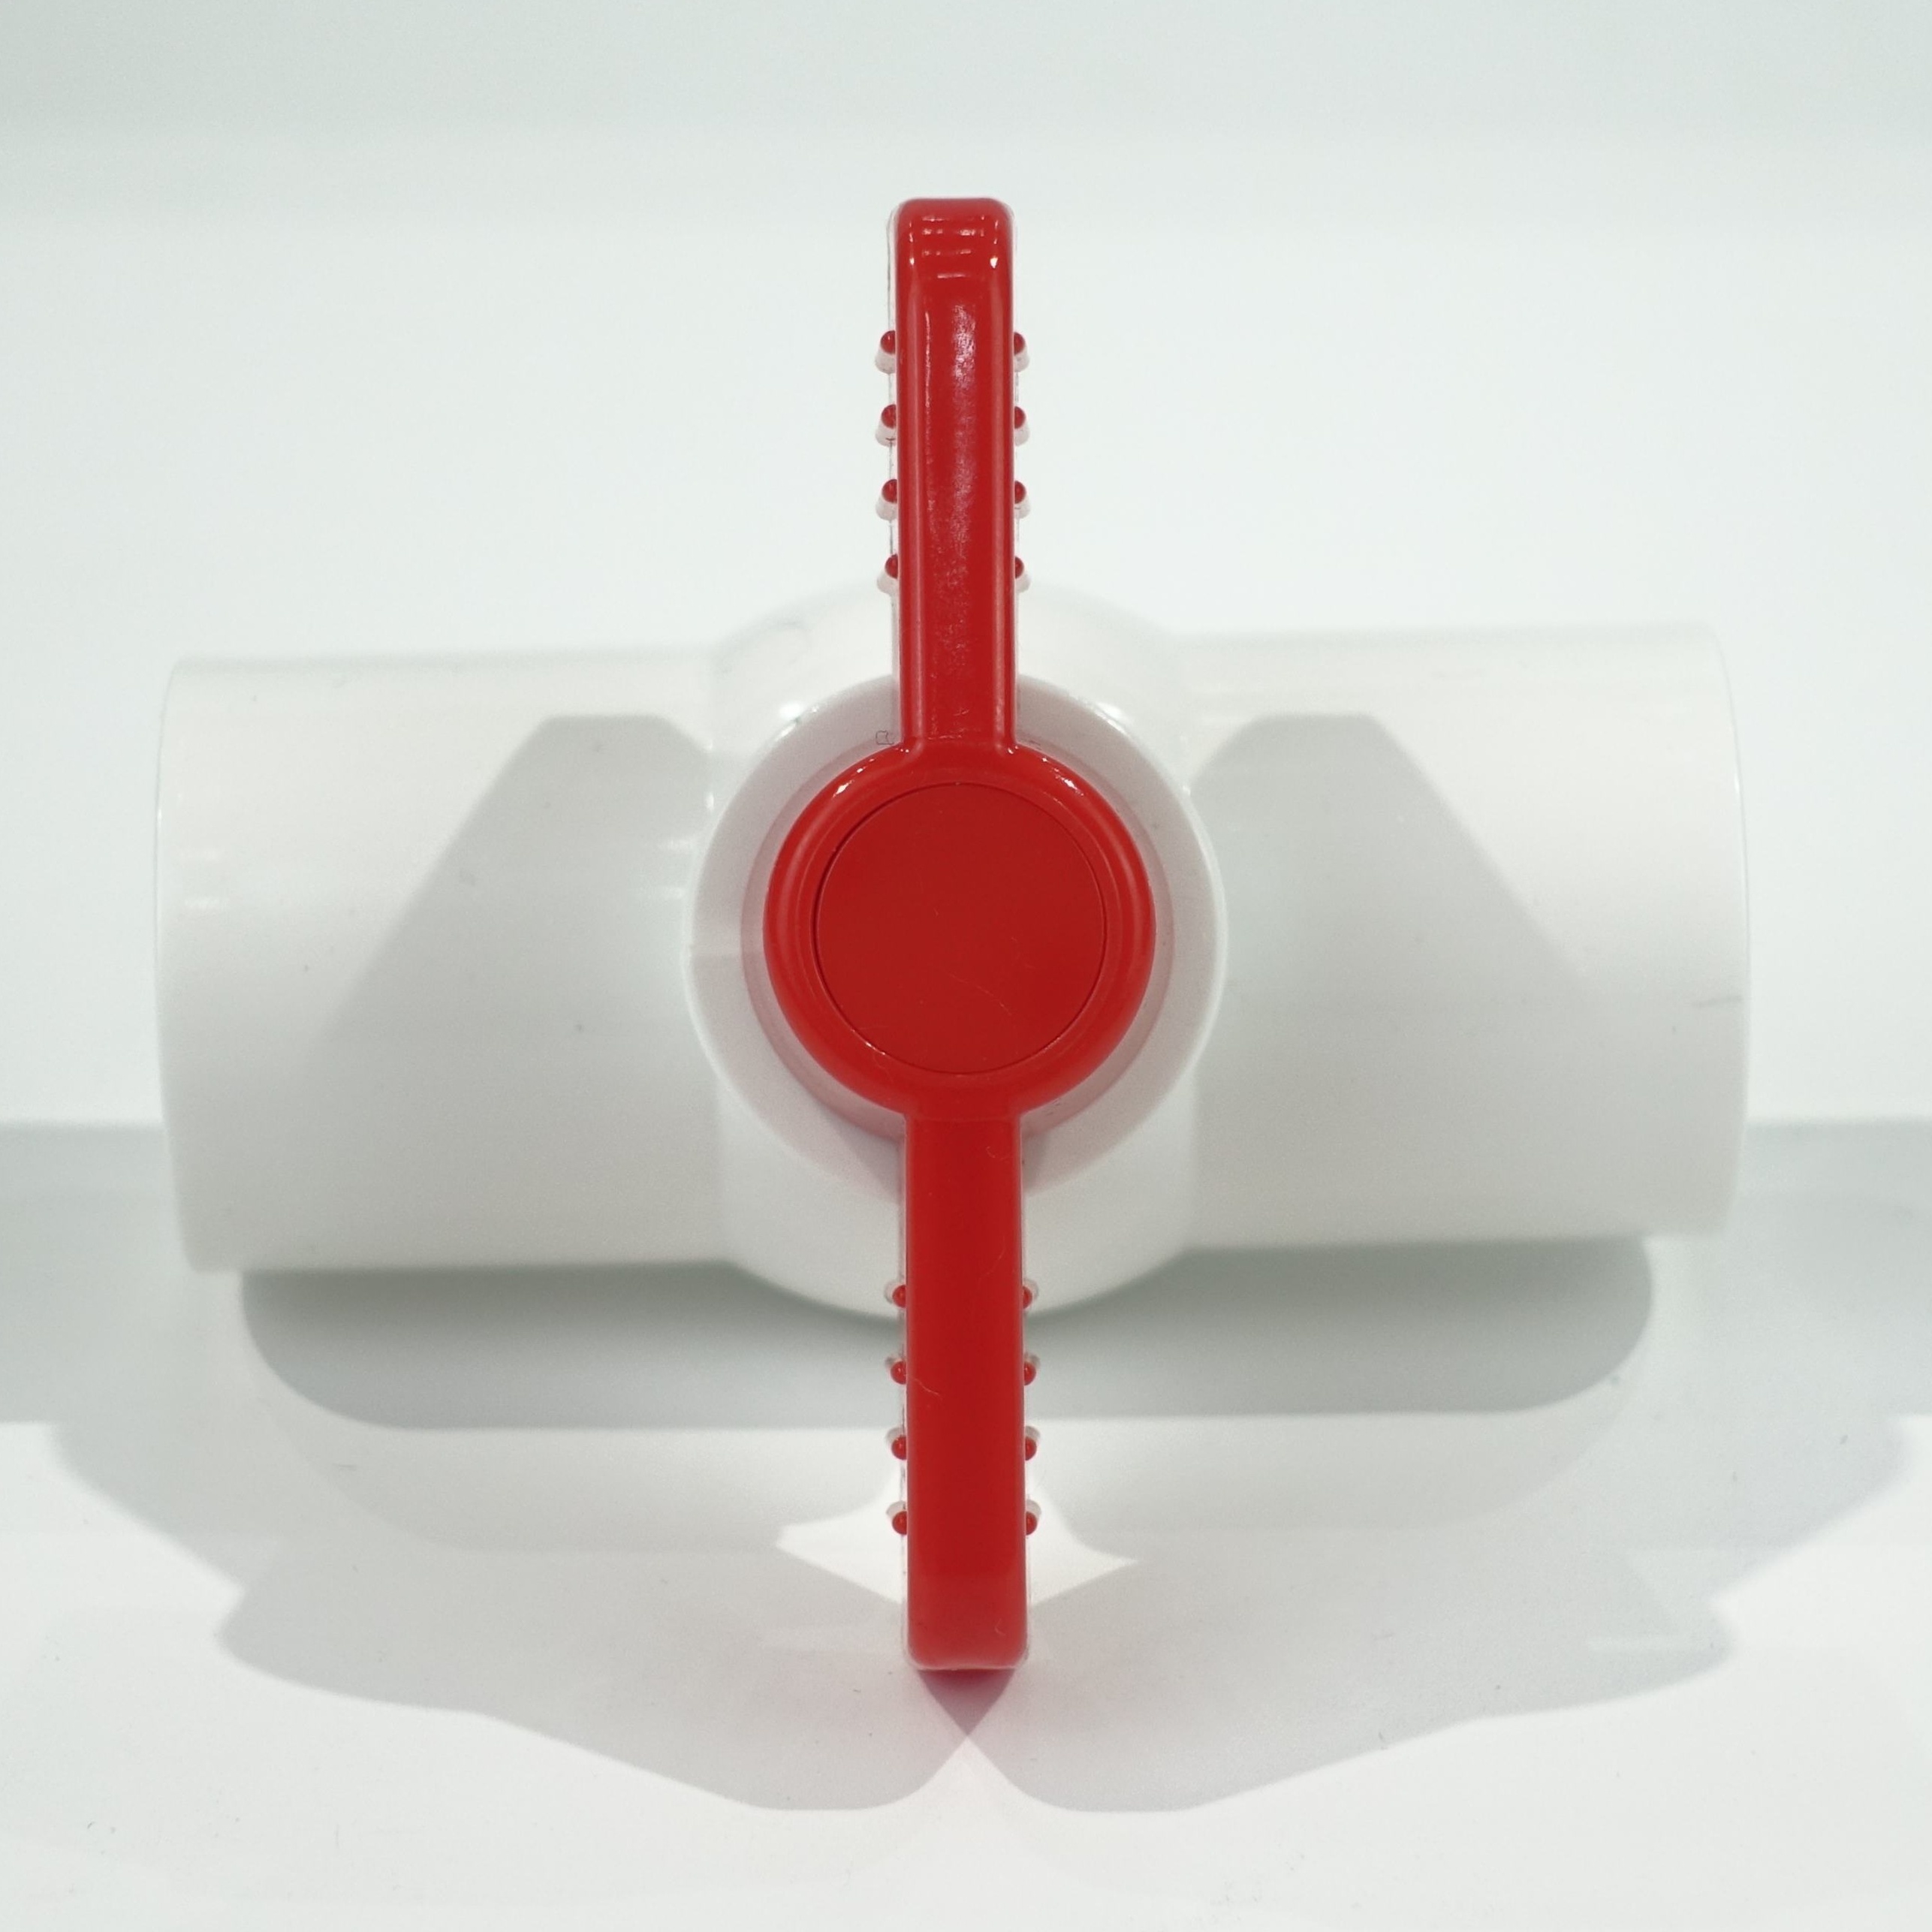 Hiboom PVC Ball Valve SCH40 Shut off Valve with Red T Handle Water